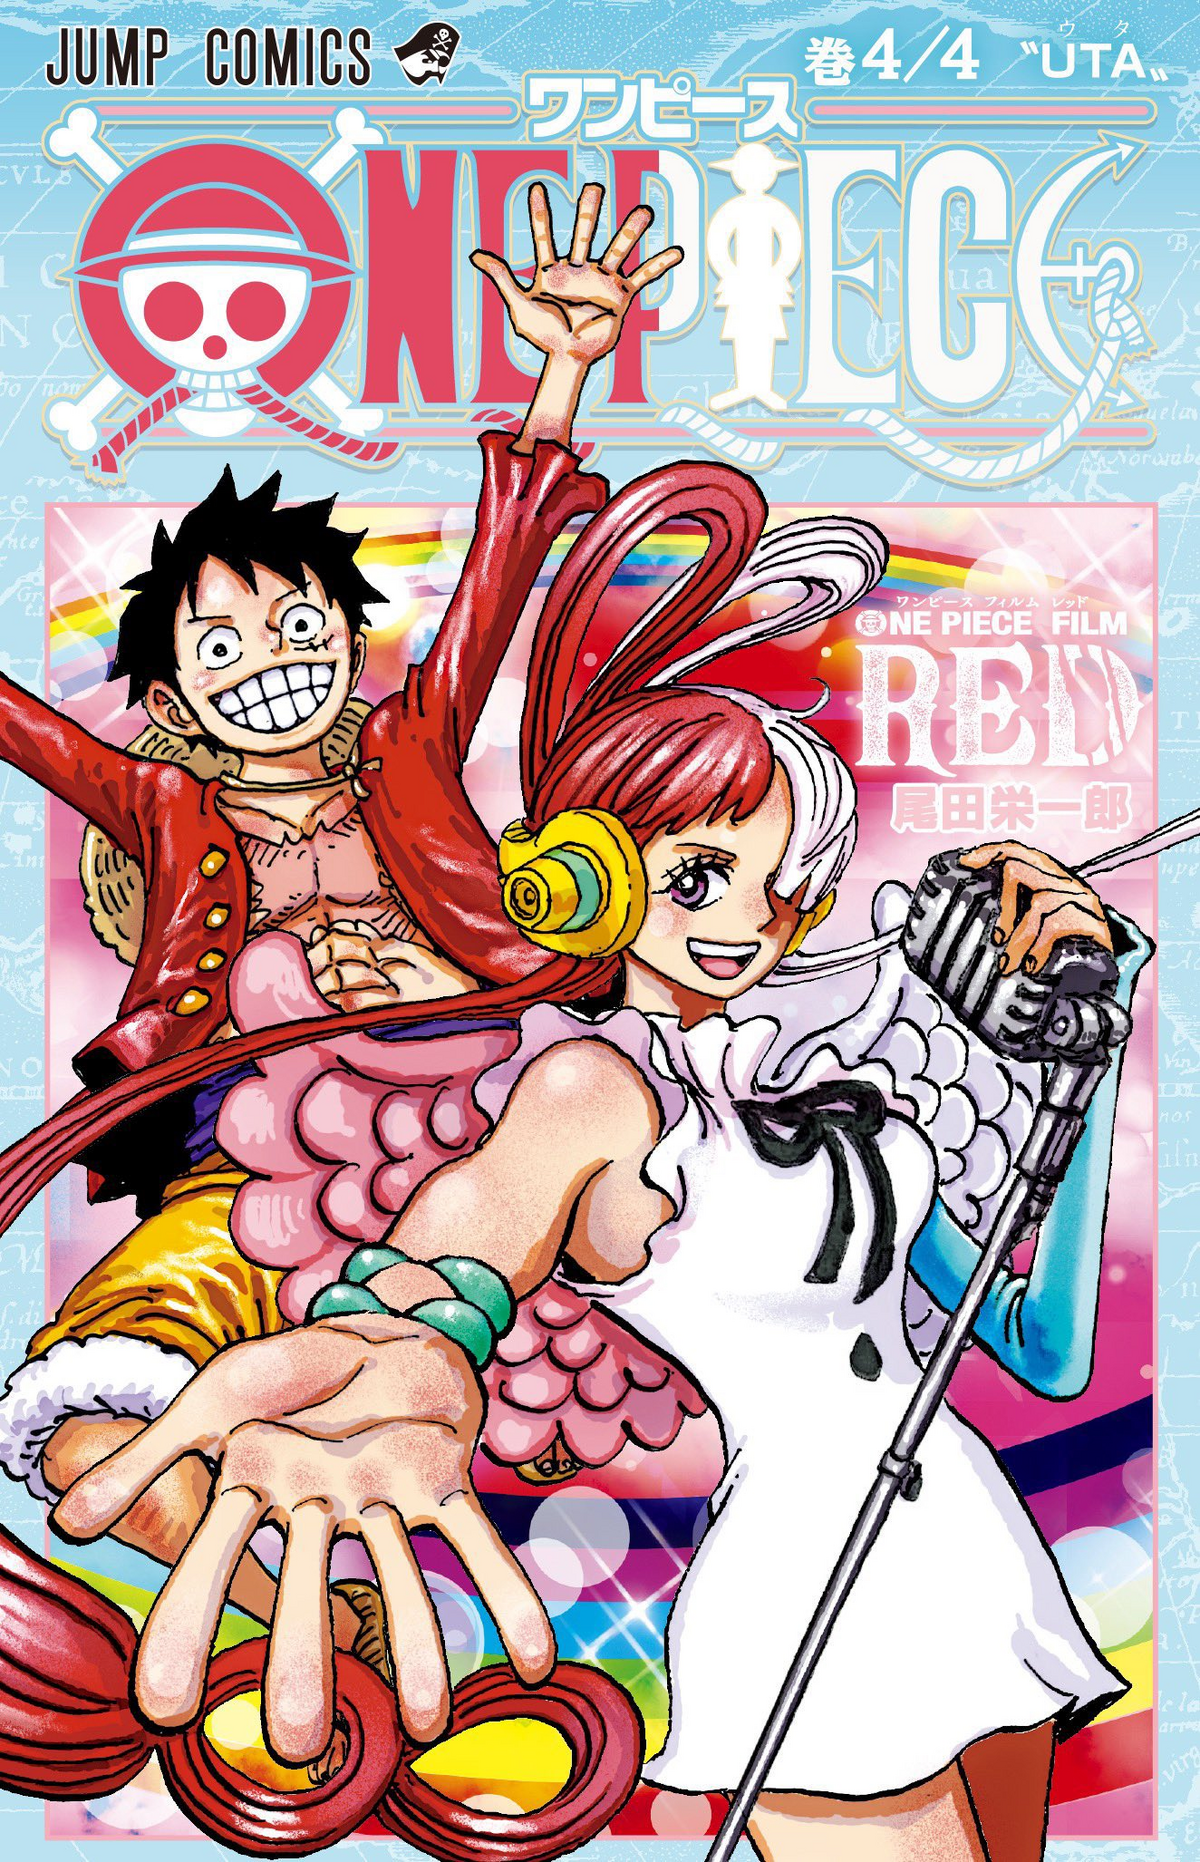 One Piece School Volume 6, One Piece Wiki